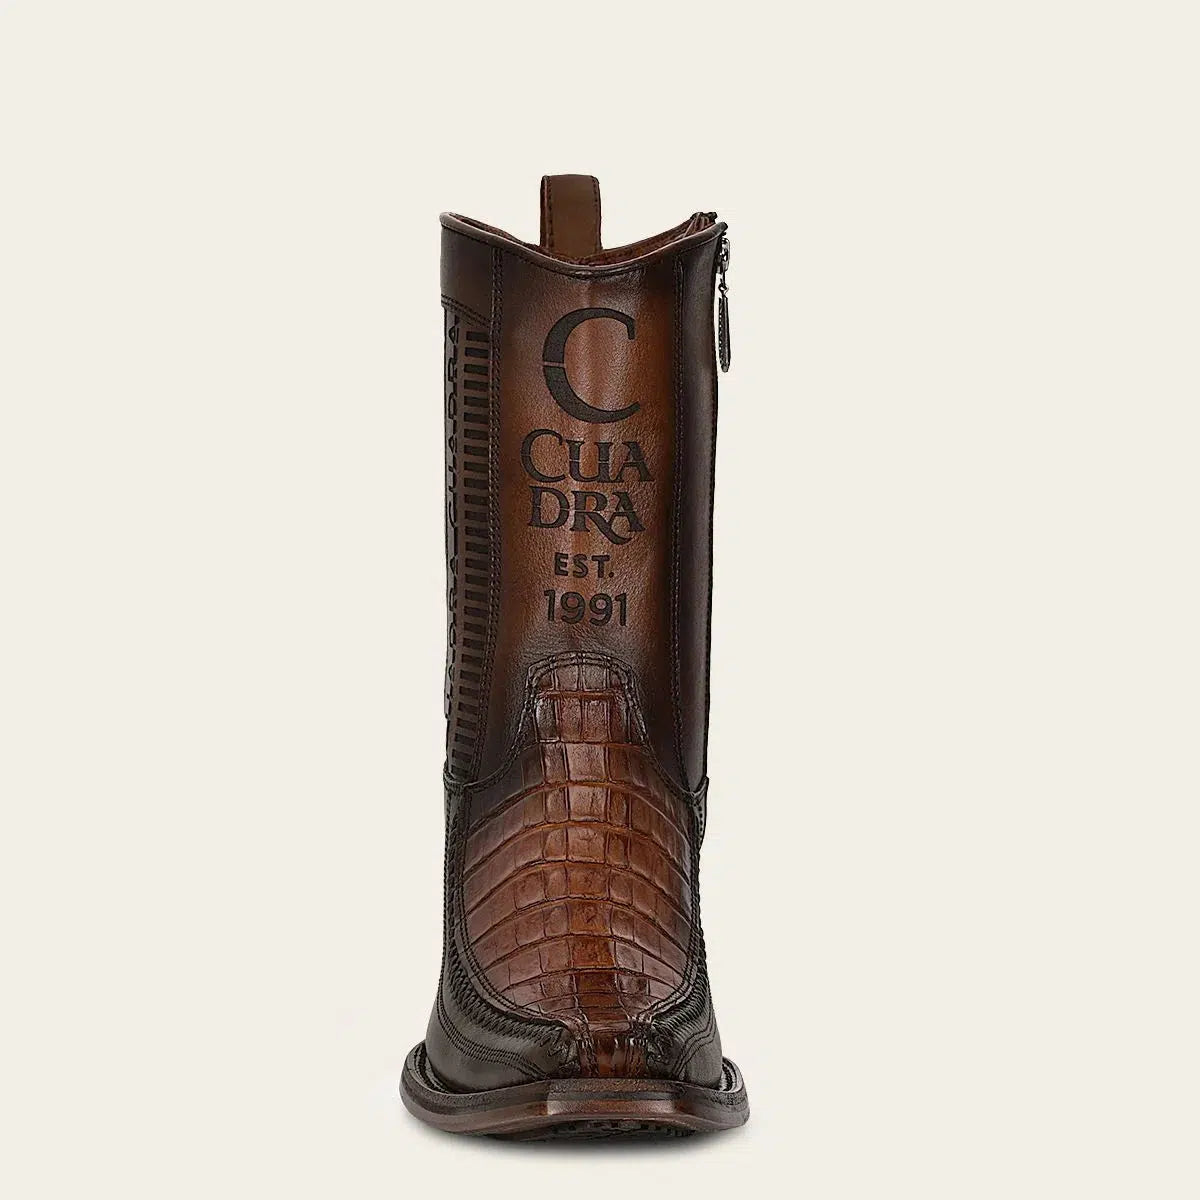 1J2KFY - Cuadra brown dress cowboy fuscus zip ankle boots for men-Kuet.us